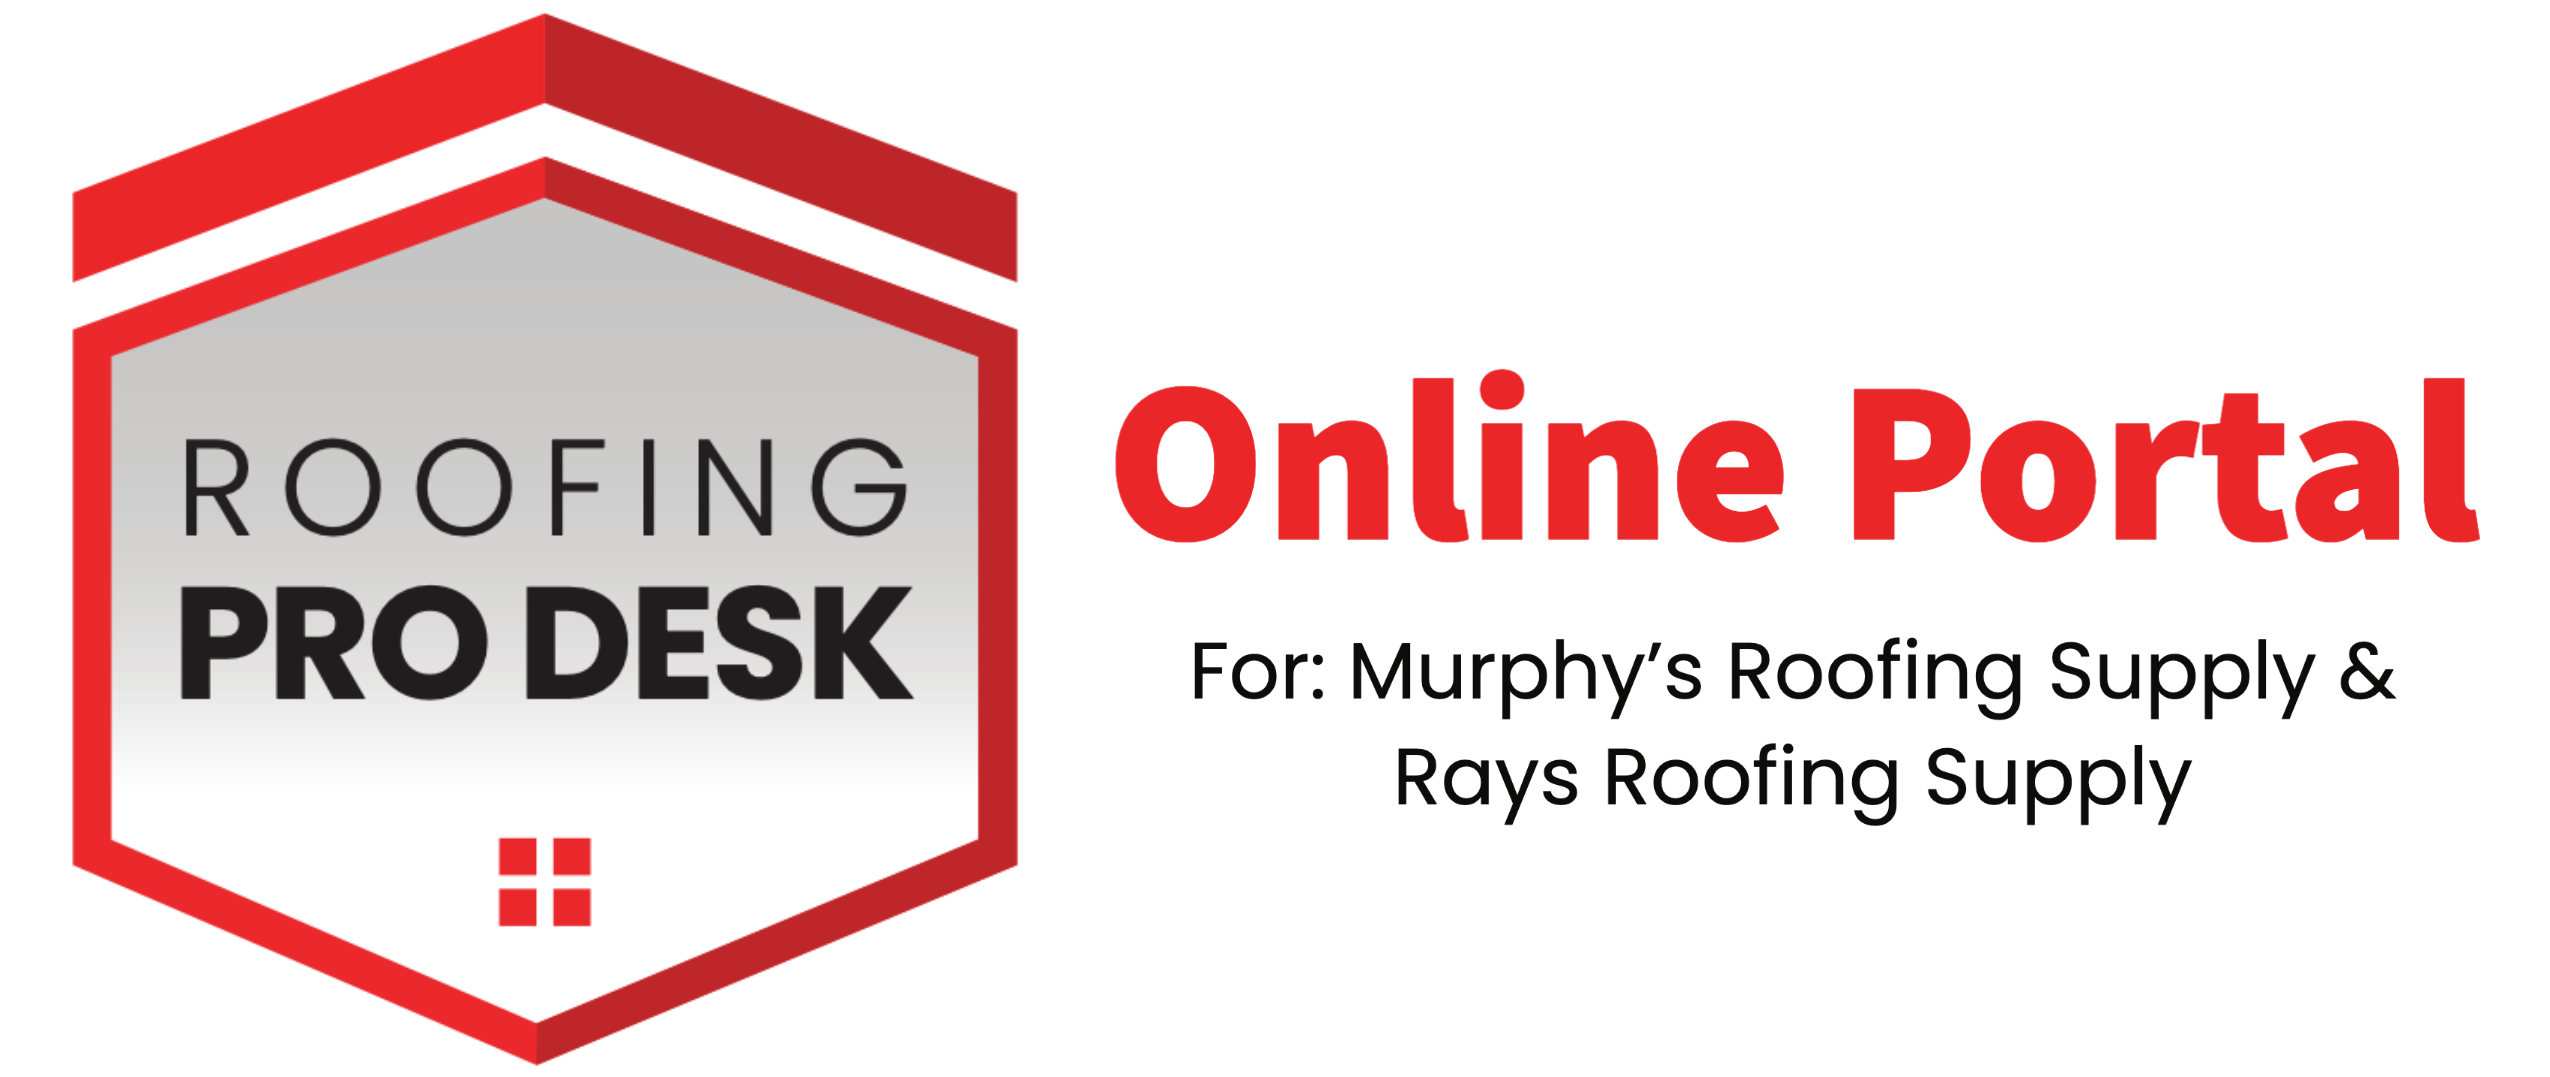 Roofing Pro Desk Logo for Online Store